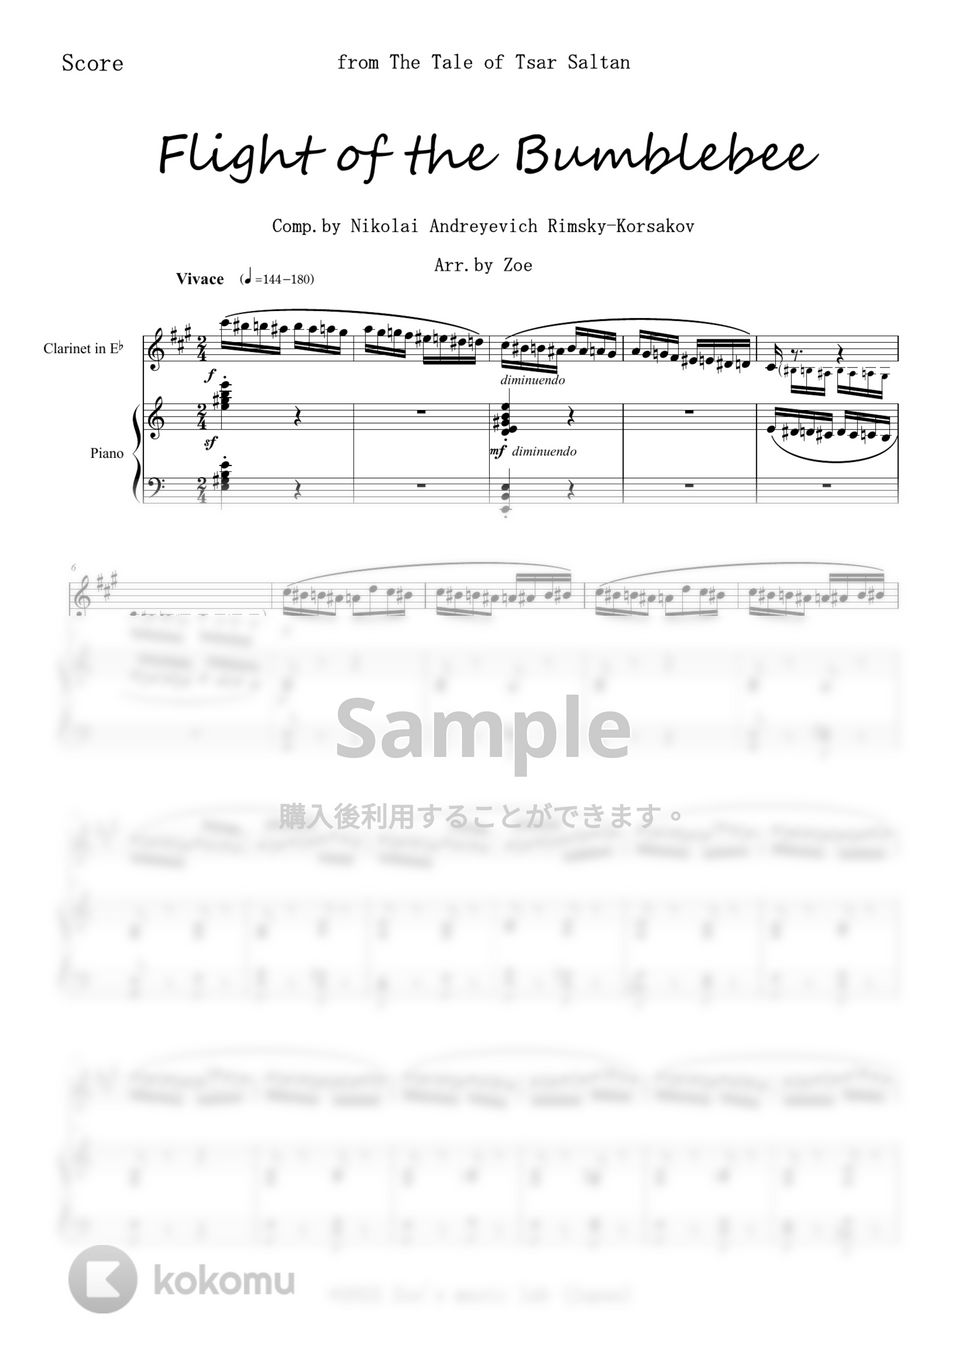 Rimsky-Korsakov - 熊蜂の飛行 for Eb Clarinet and Piano (Flight of the Bumblebee)  (ピアノ/エスクラ/クラリネット/Ebクラリネット) by Zoe